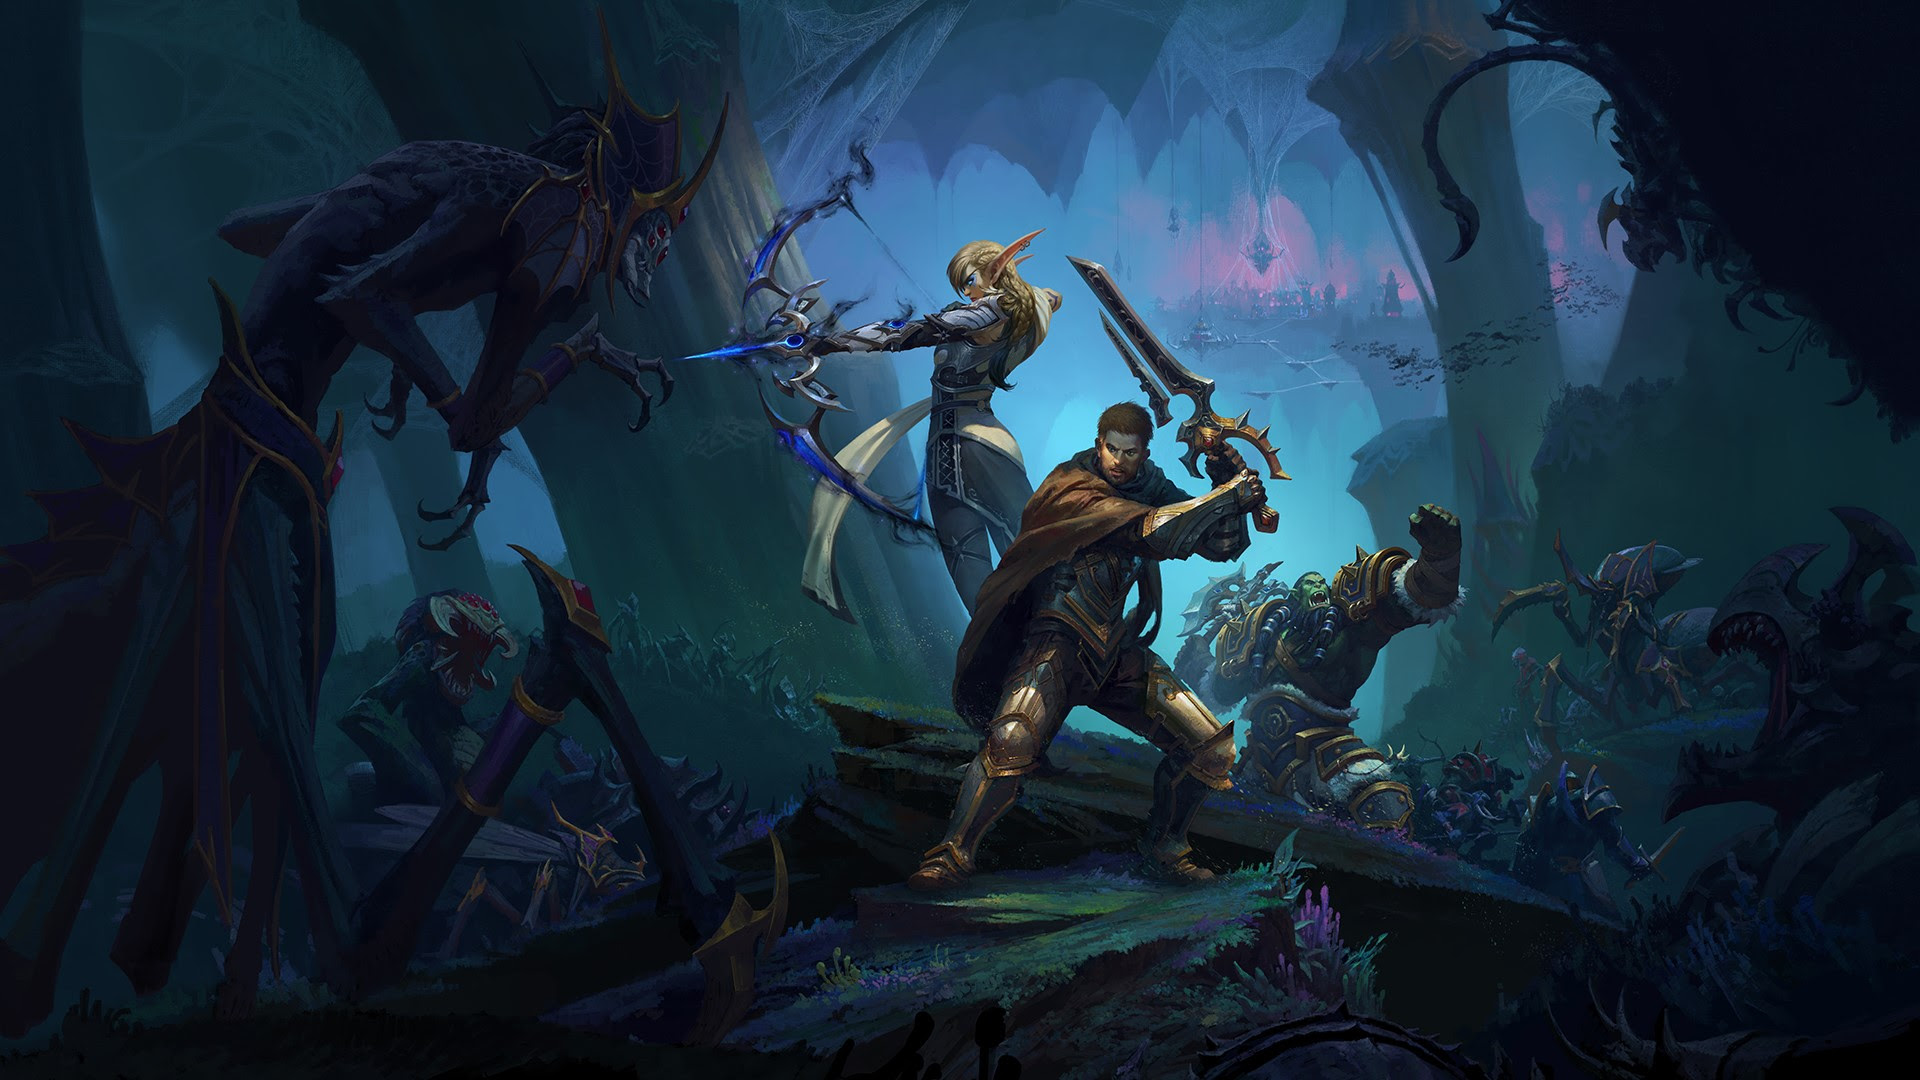 Lançamento Global de Warcraft Rumble, em 3 de Novembro! — Warcraft